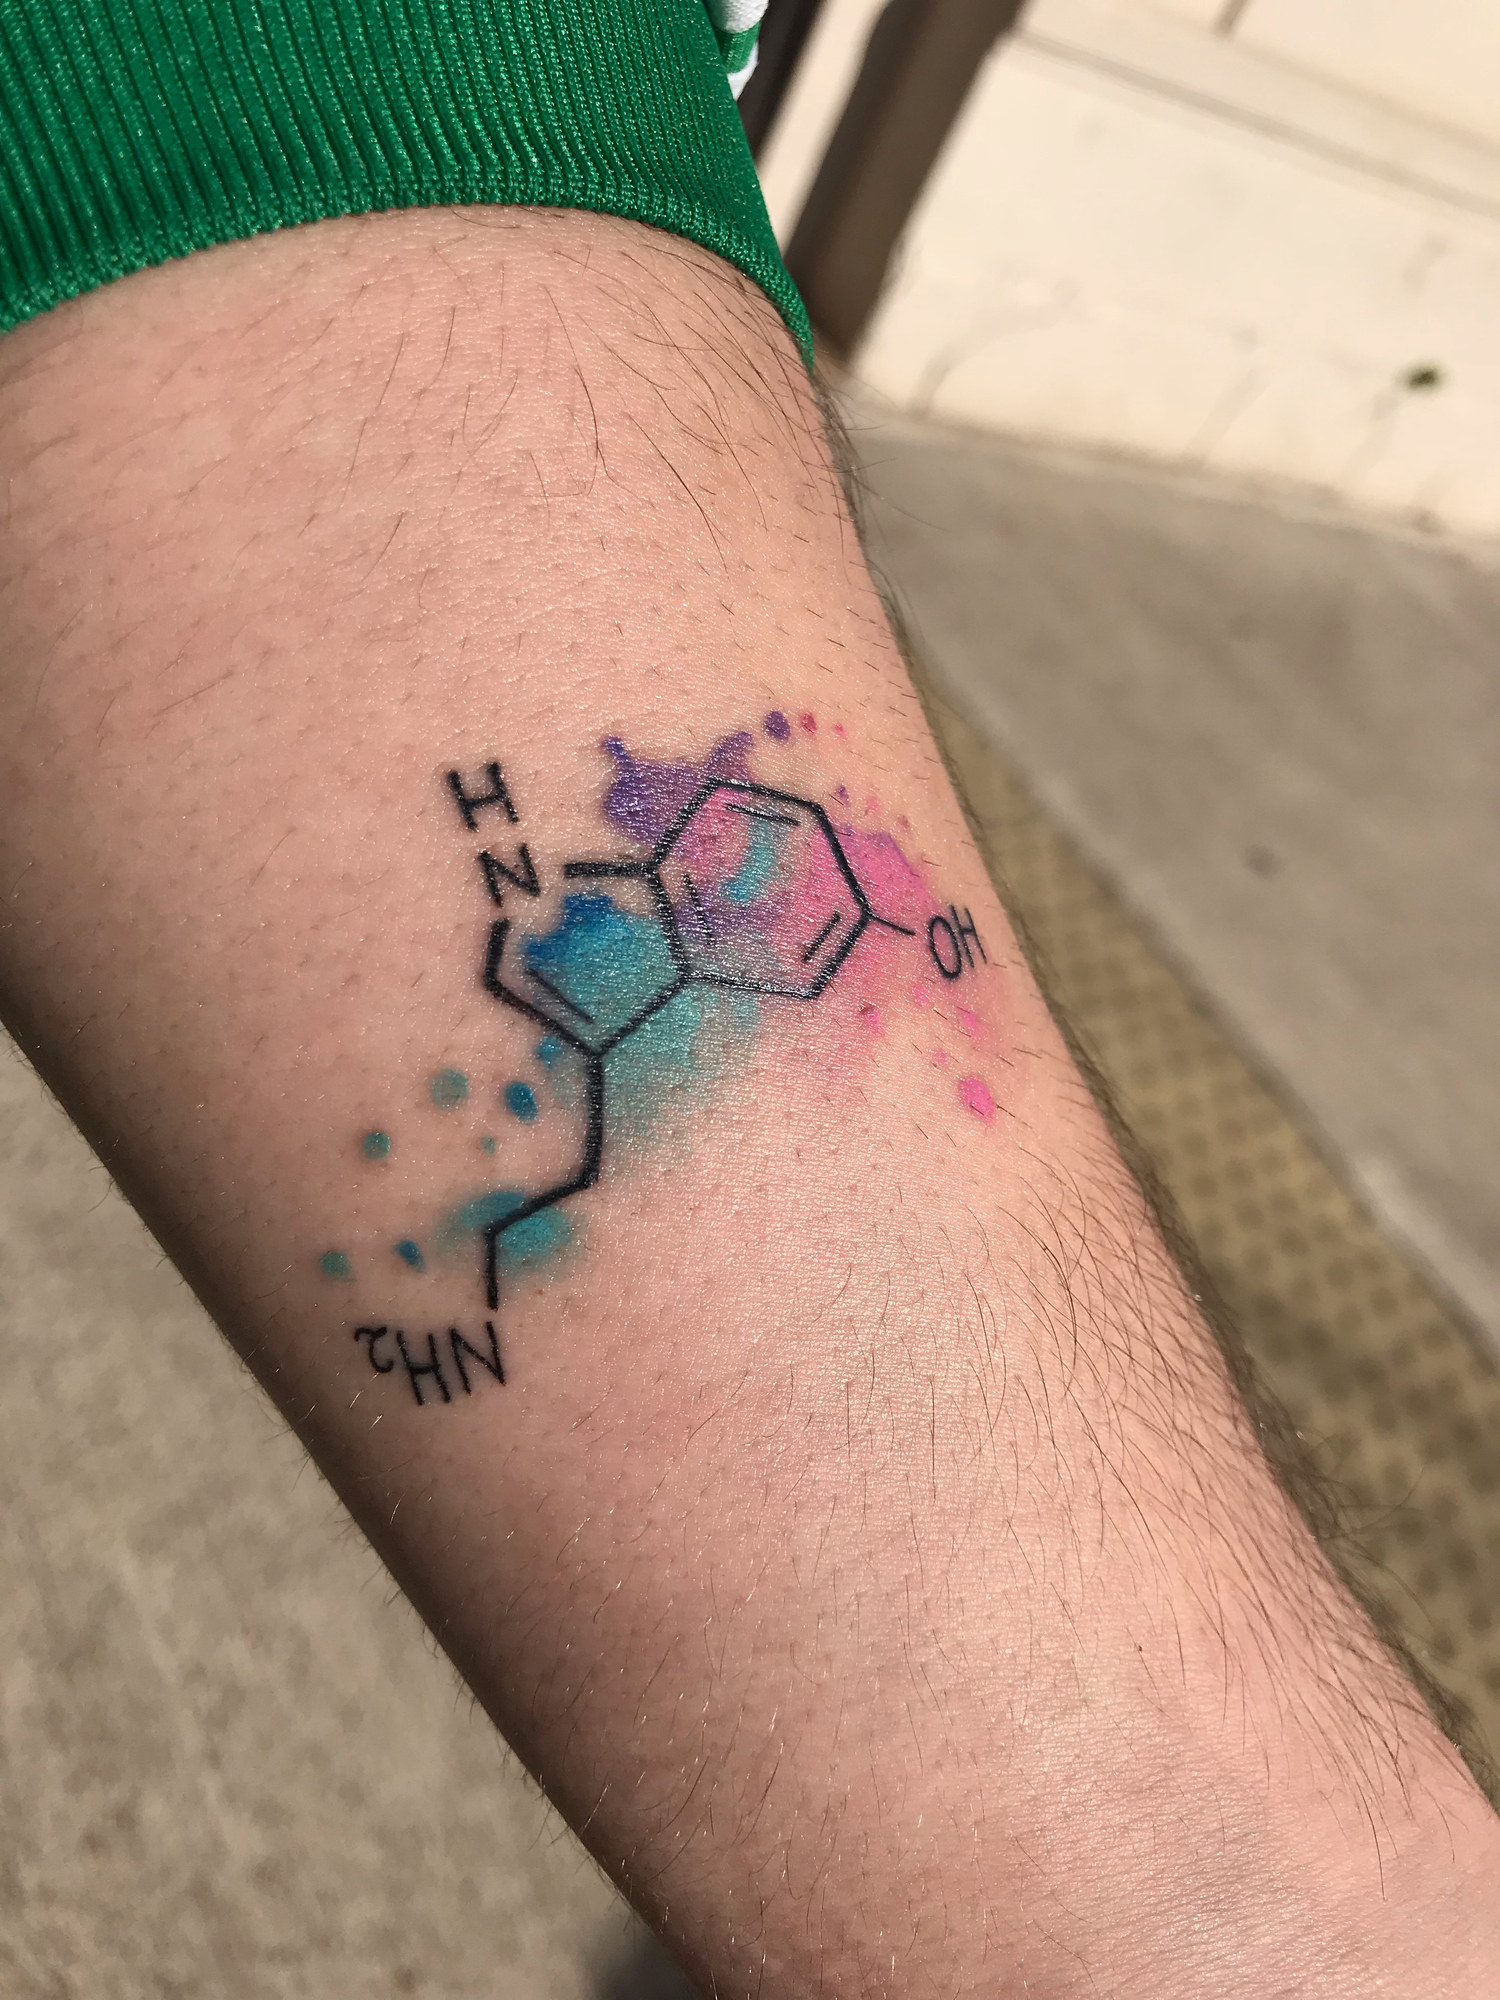 A chemistry formula tattoo on someone&#x27;s arm